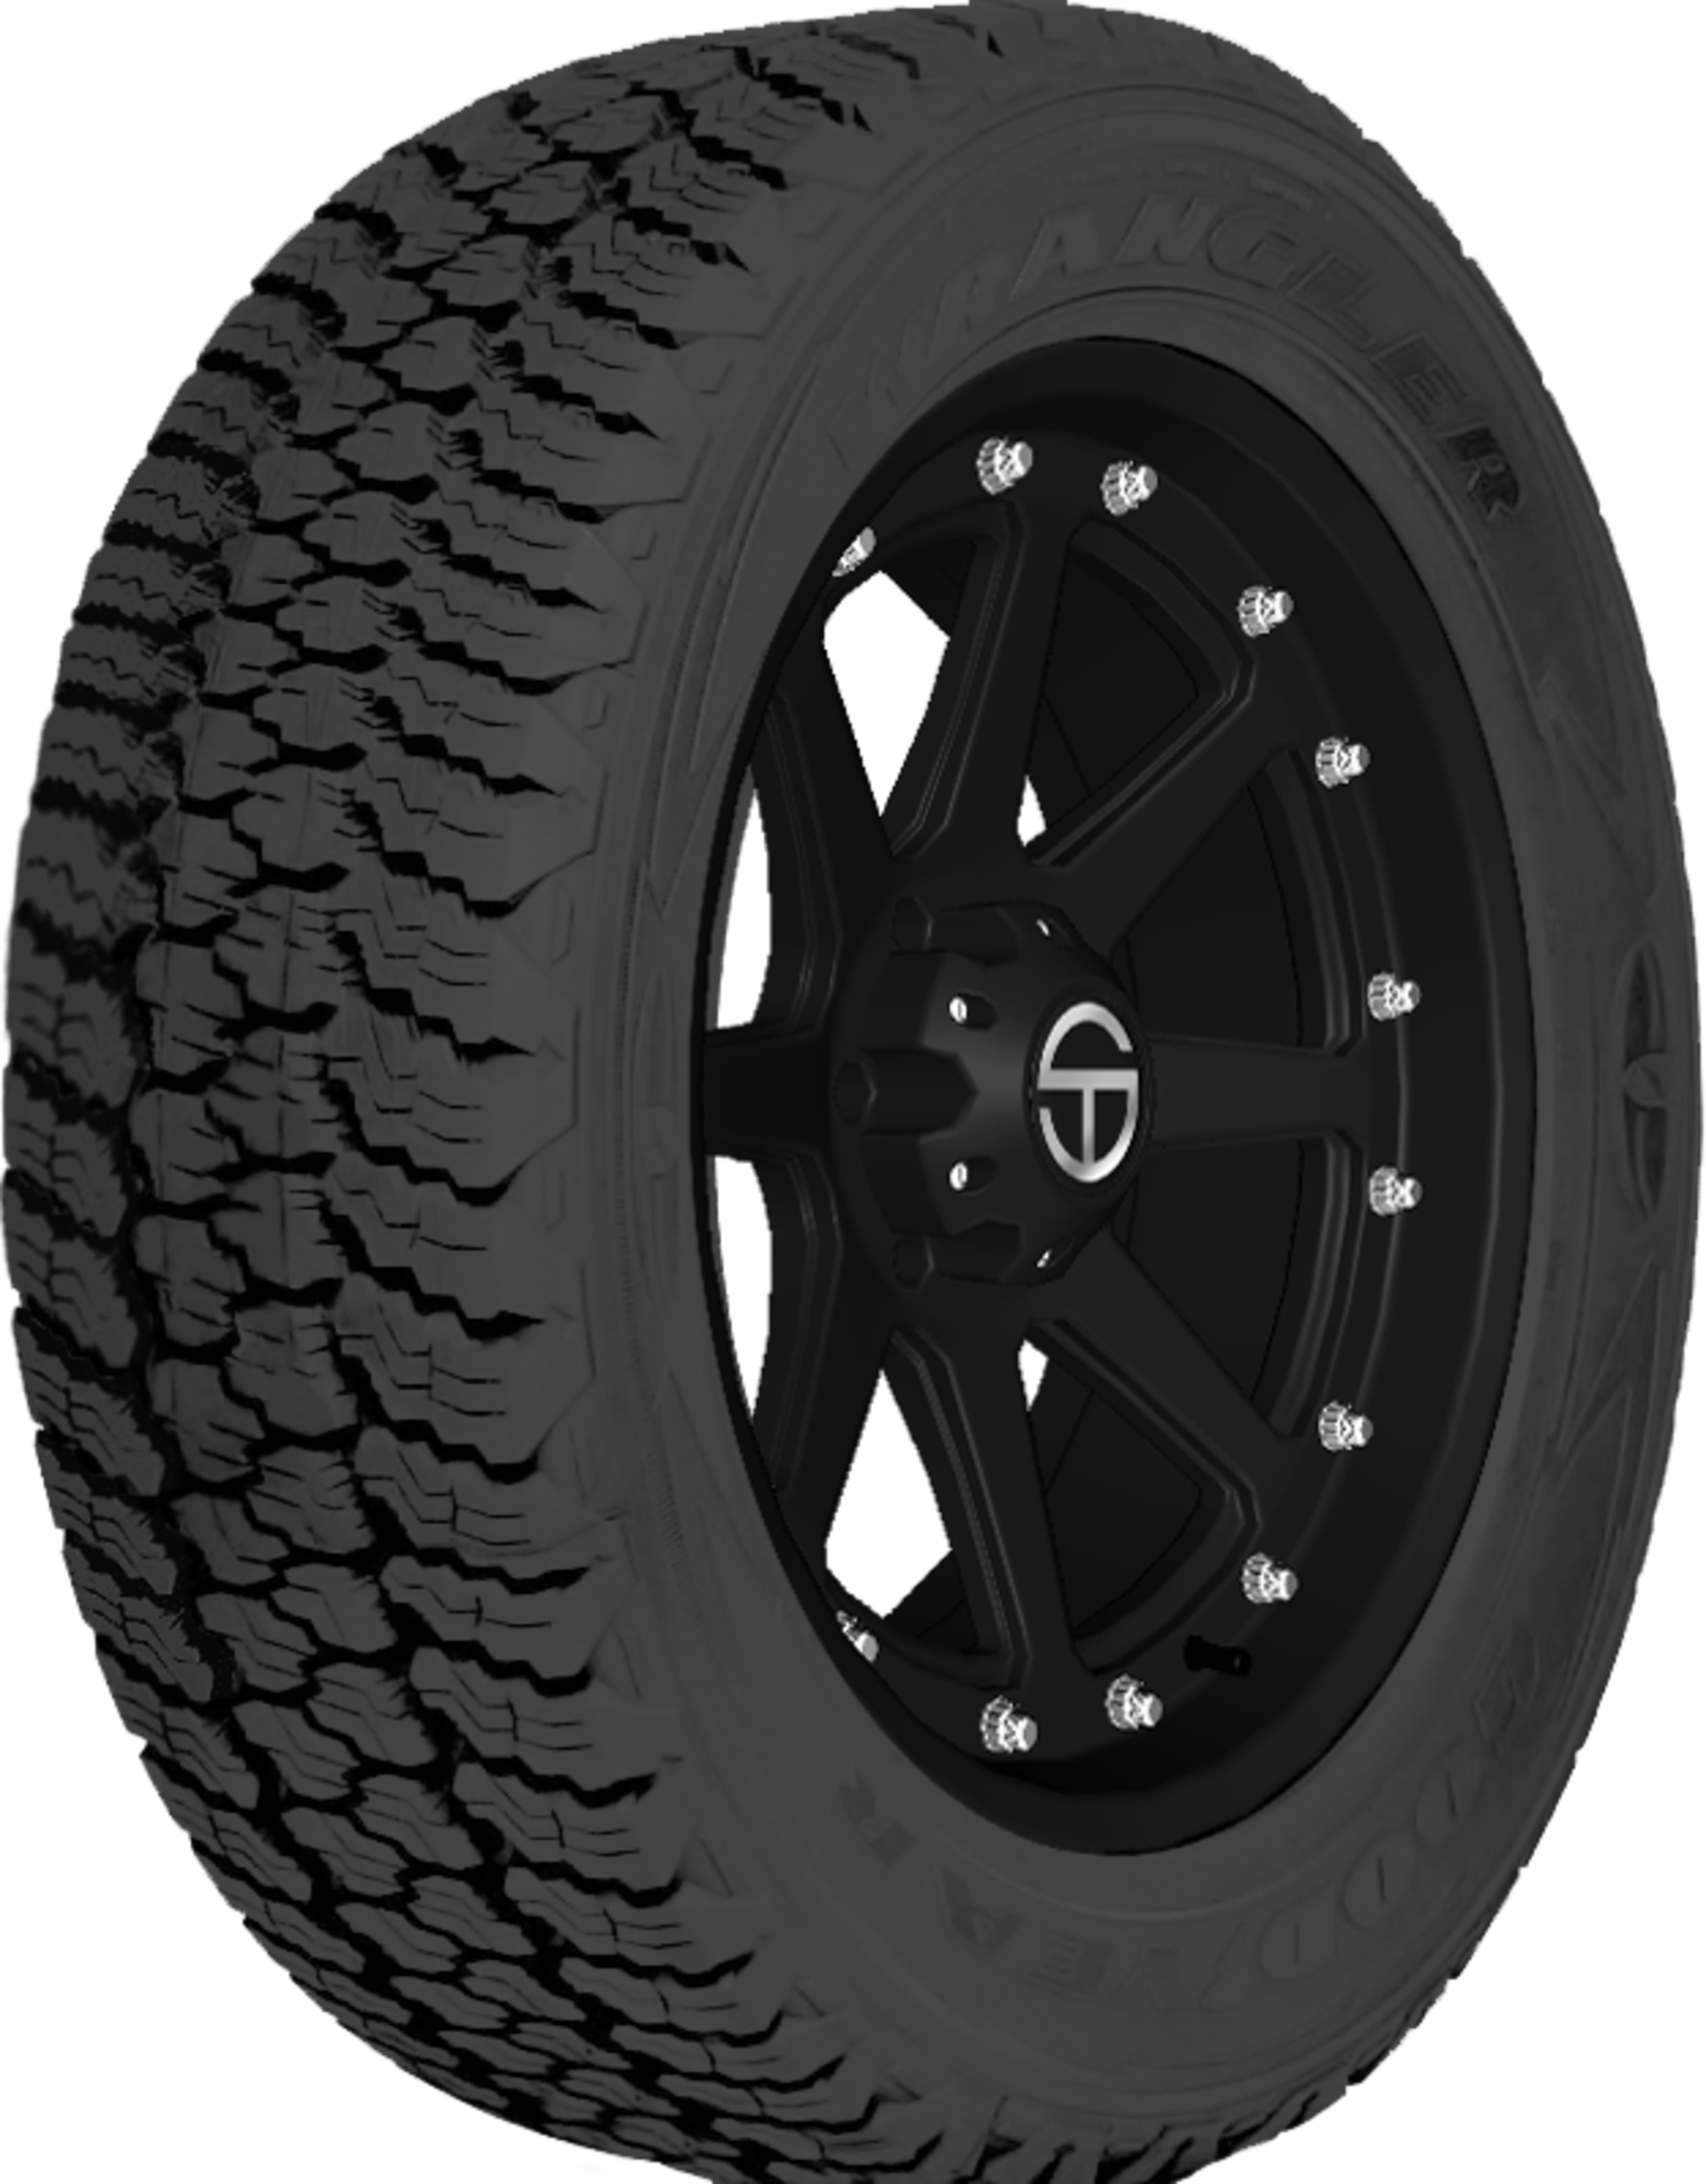 Buy Goodyear Wrangler SilentArmor Tires Online | SimpleTire